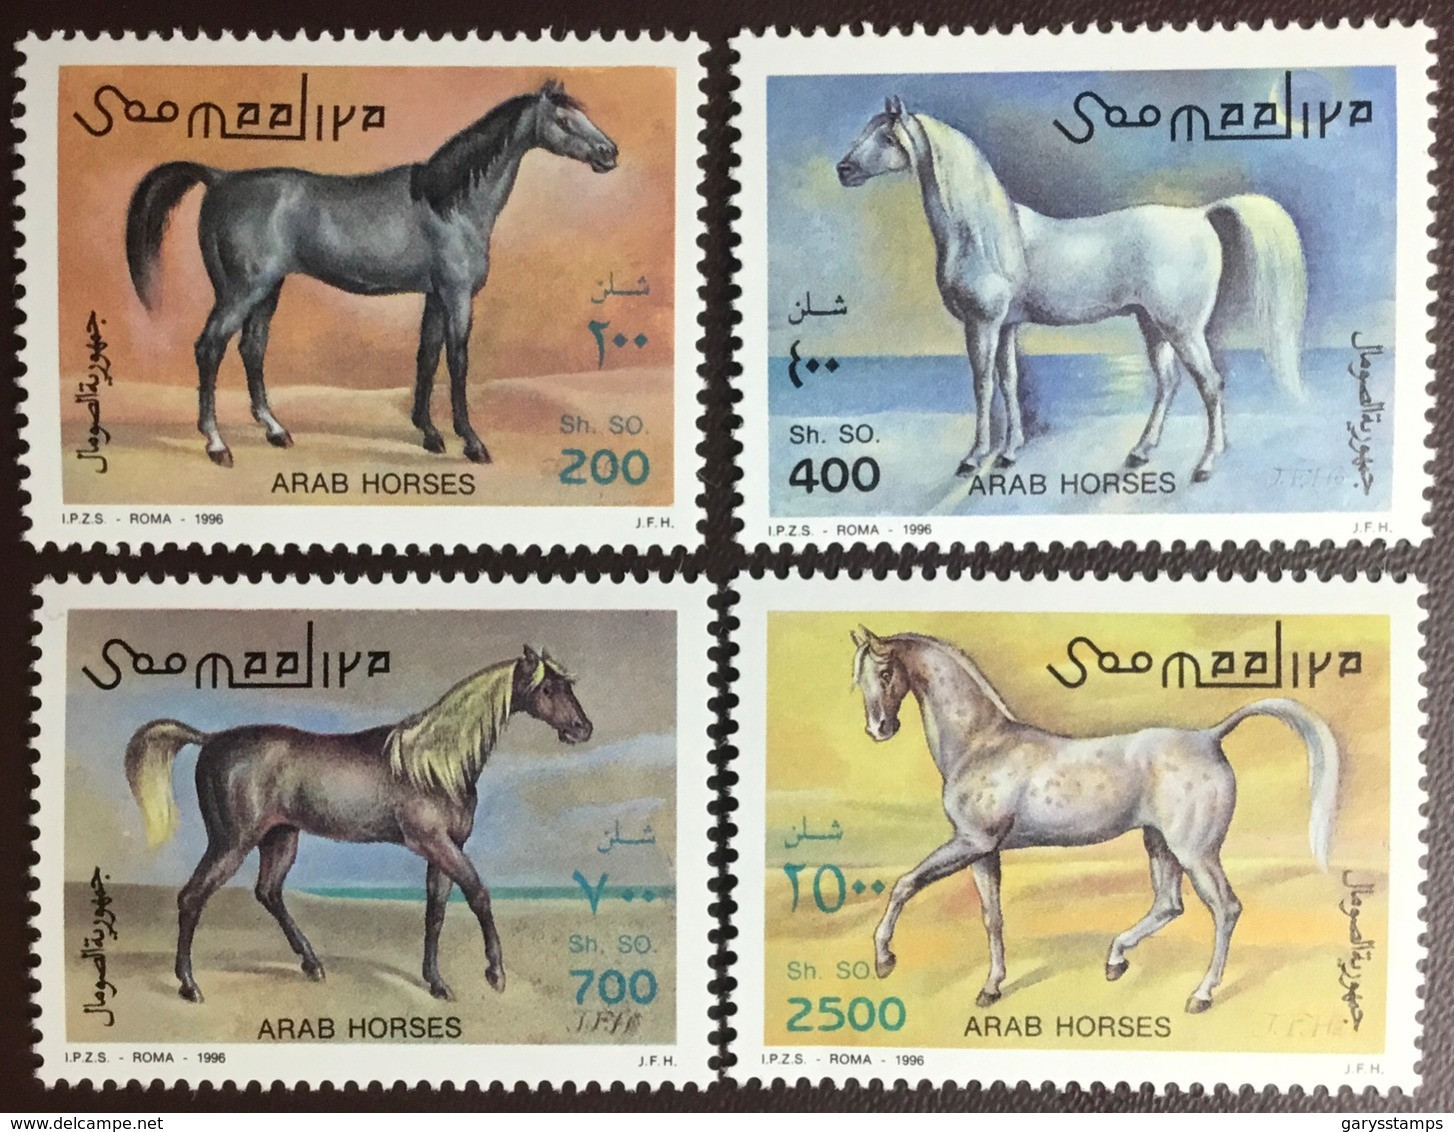 Somalia 1996 Arab Horses MNH - Horses